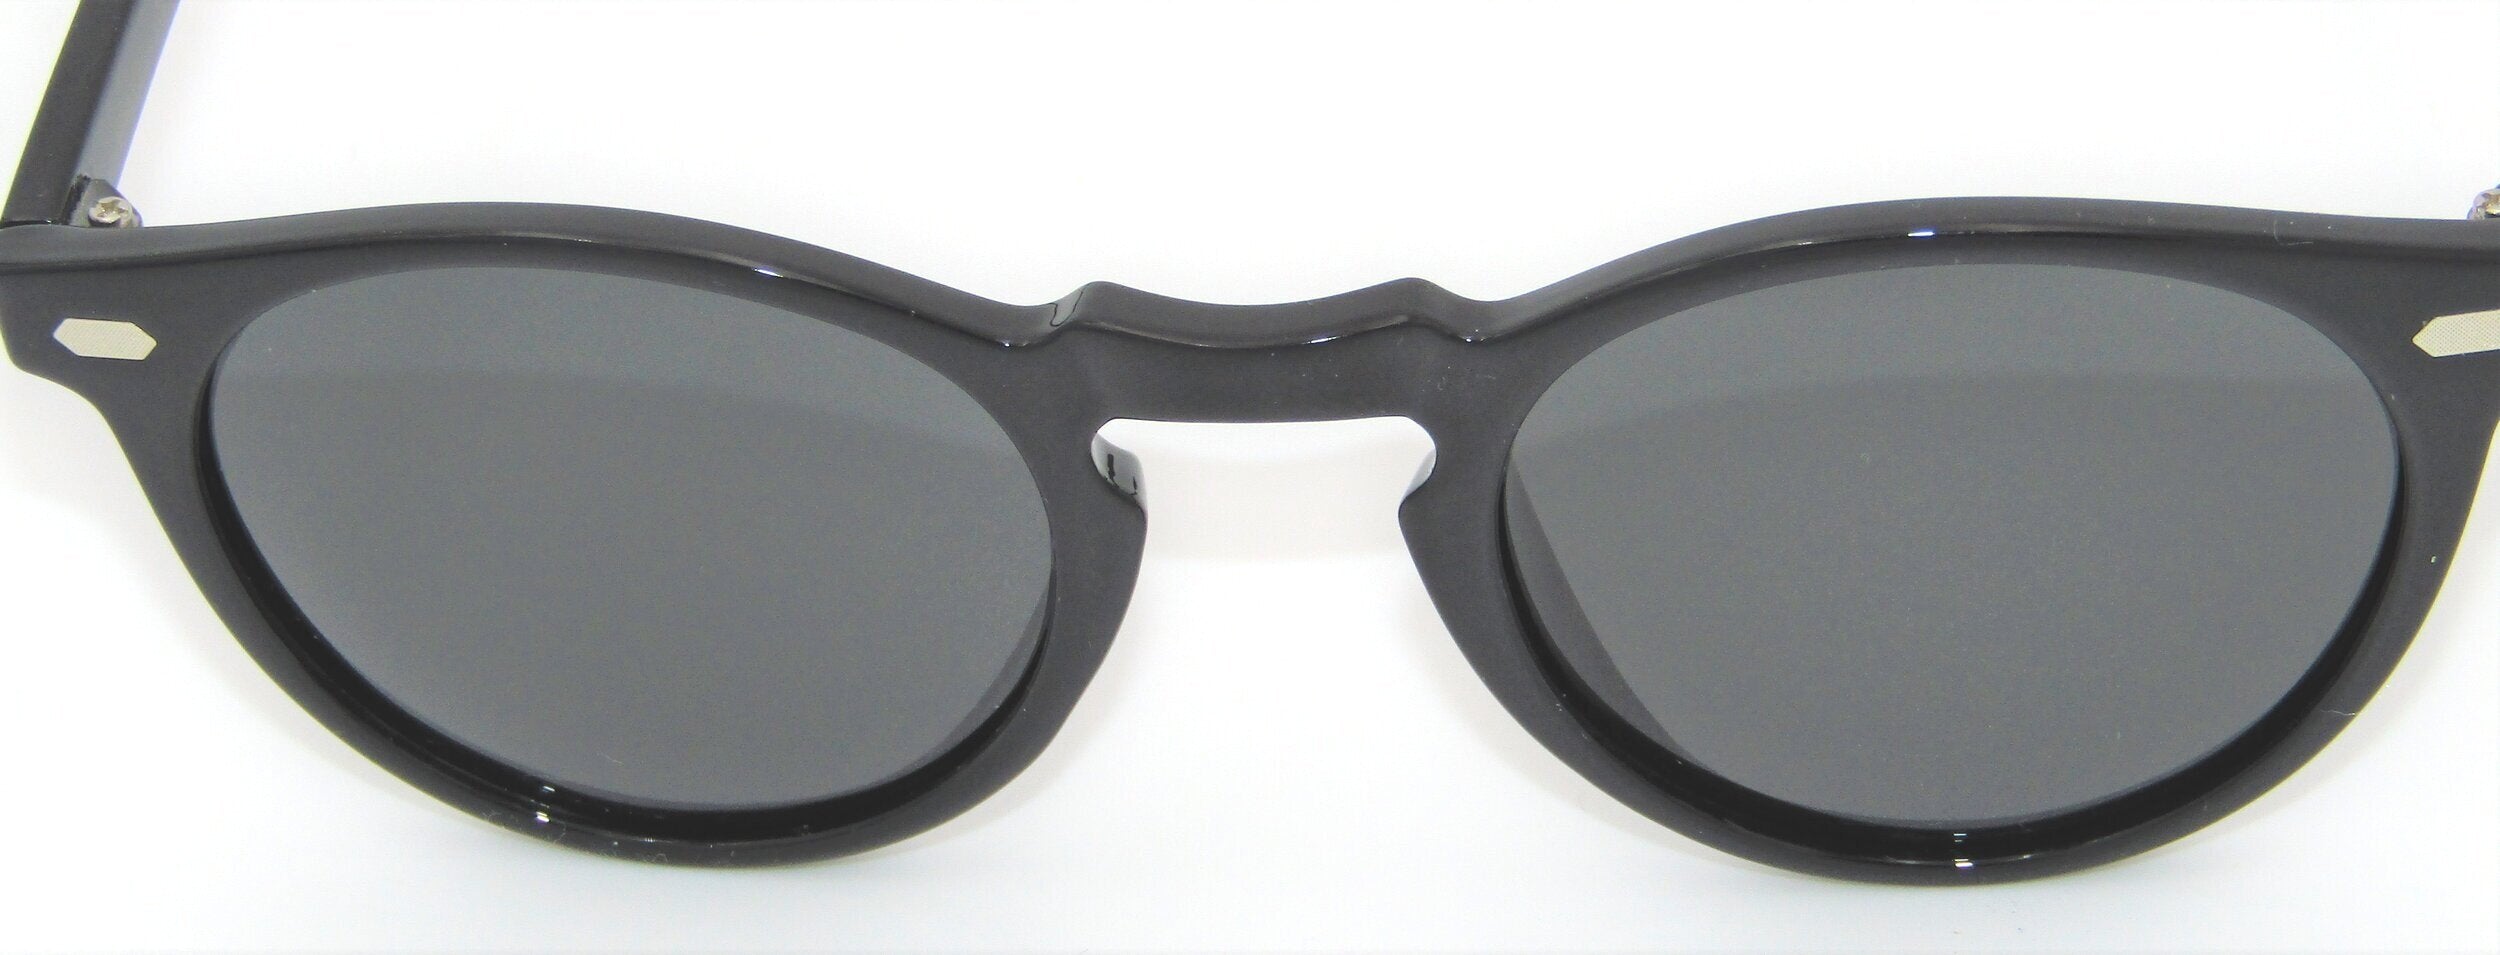 AN Round Polarized Sunglasses